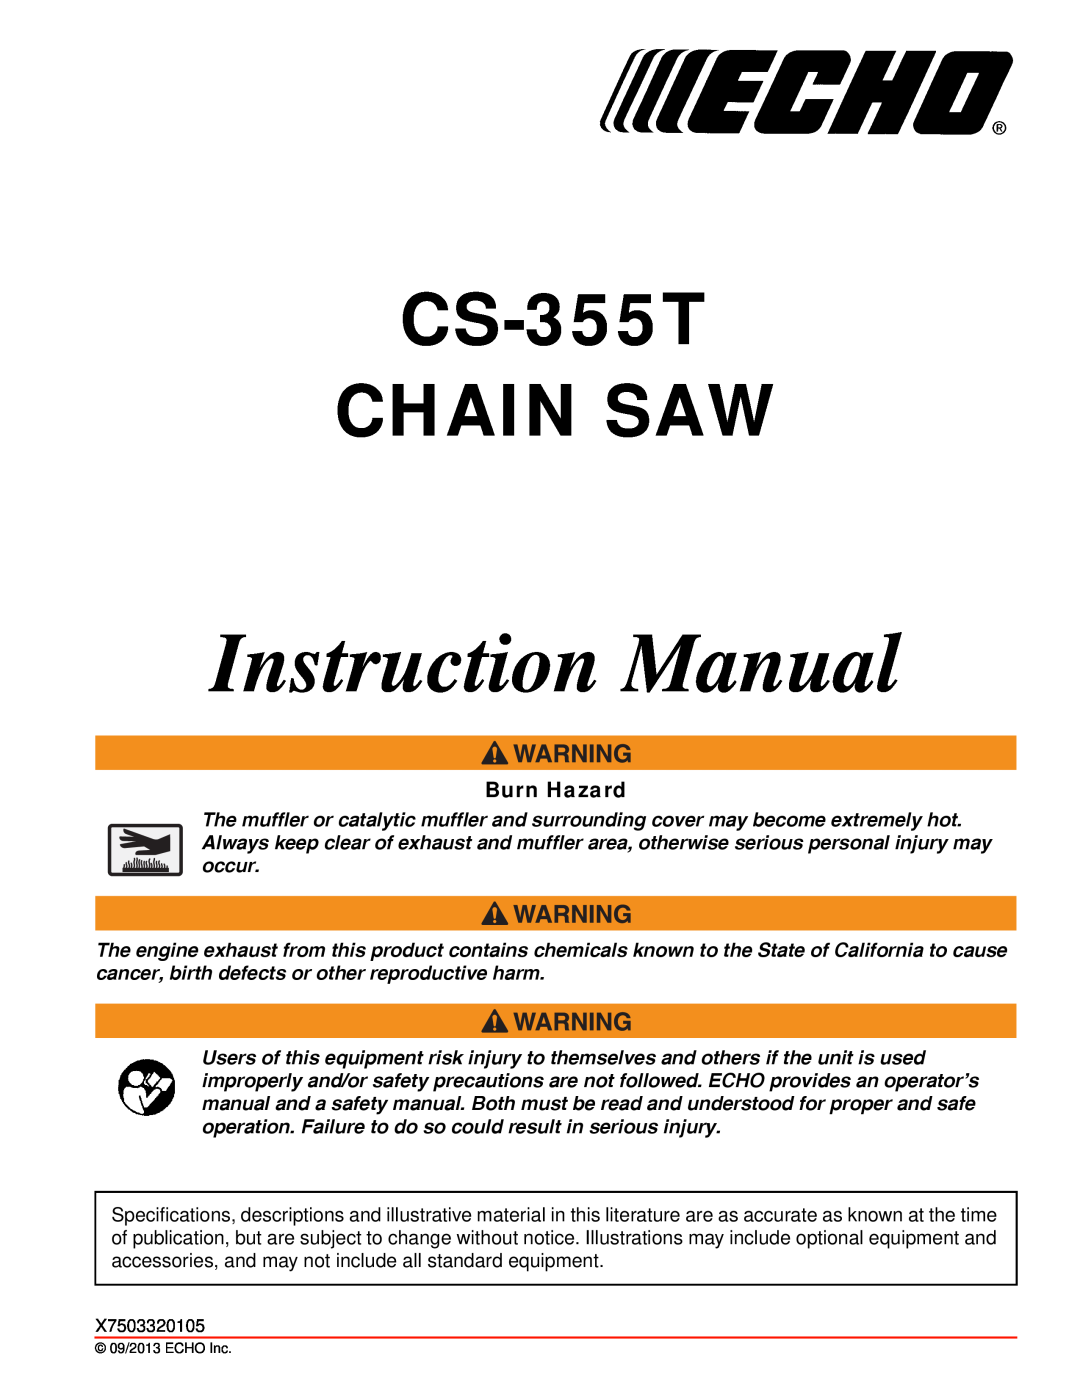 Echo instruction manual Burn Hazard, CS-355T CHAIN SAW 